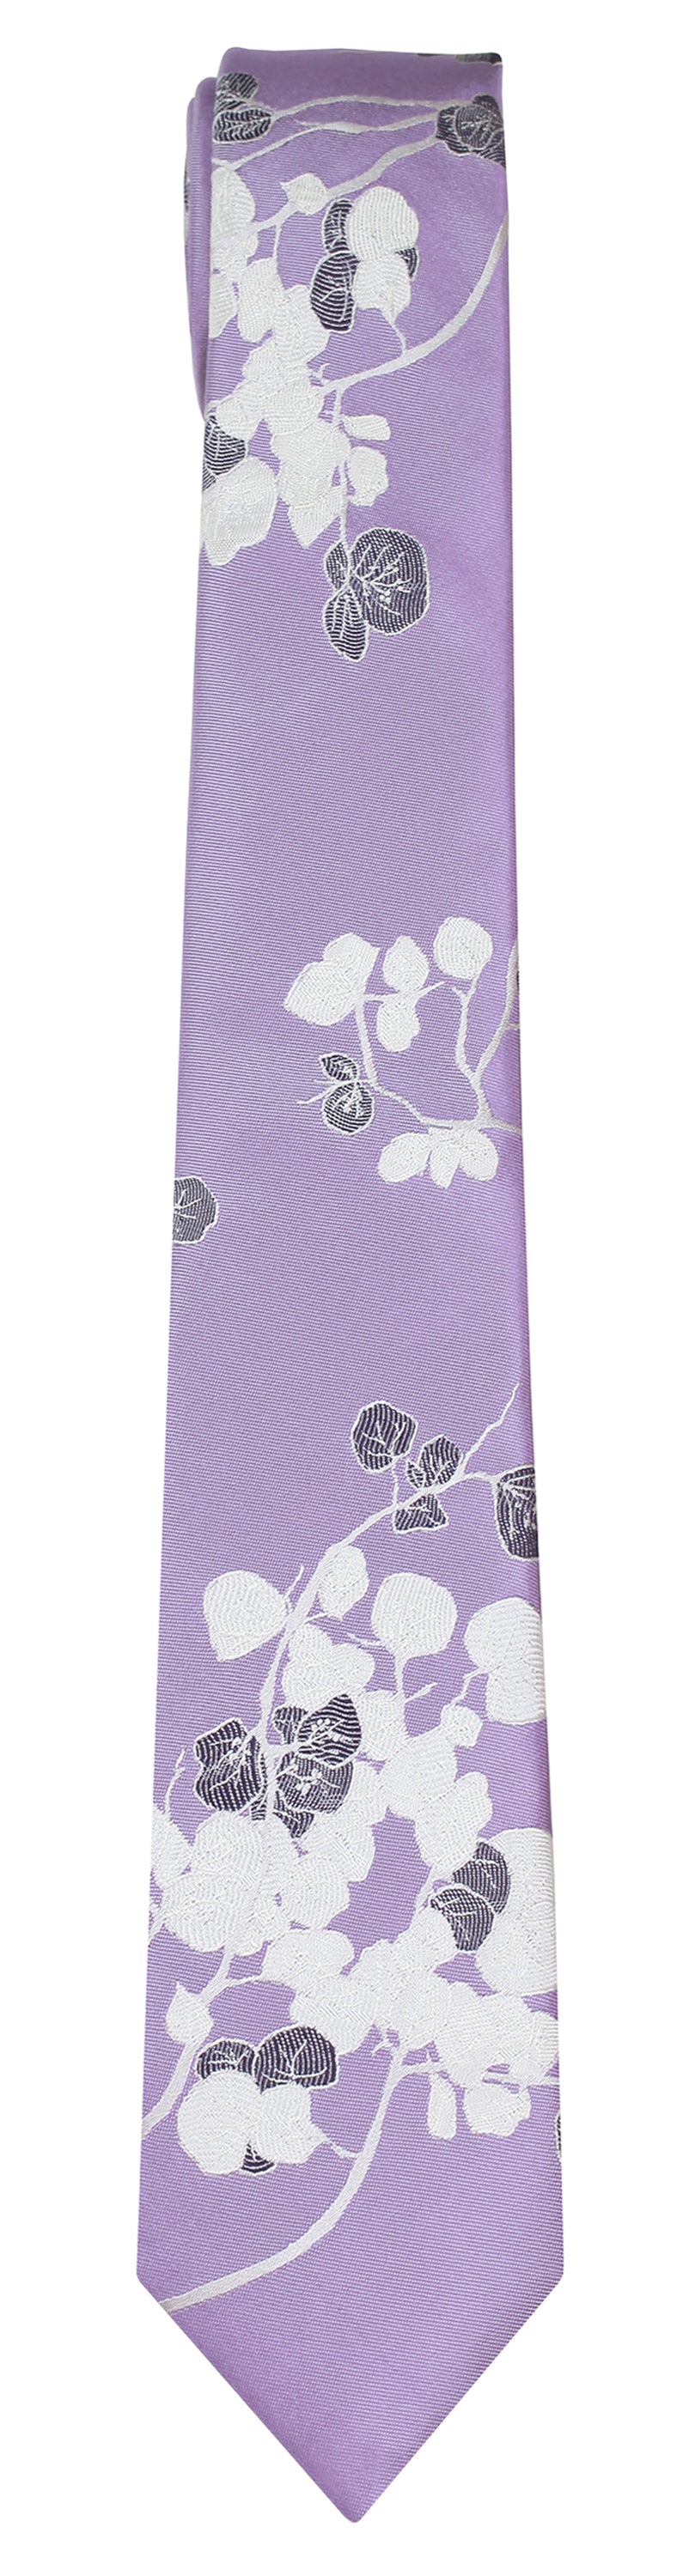 Mimi Fong Bougainvillea Tie in Lavender